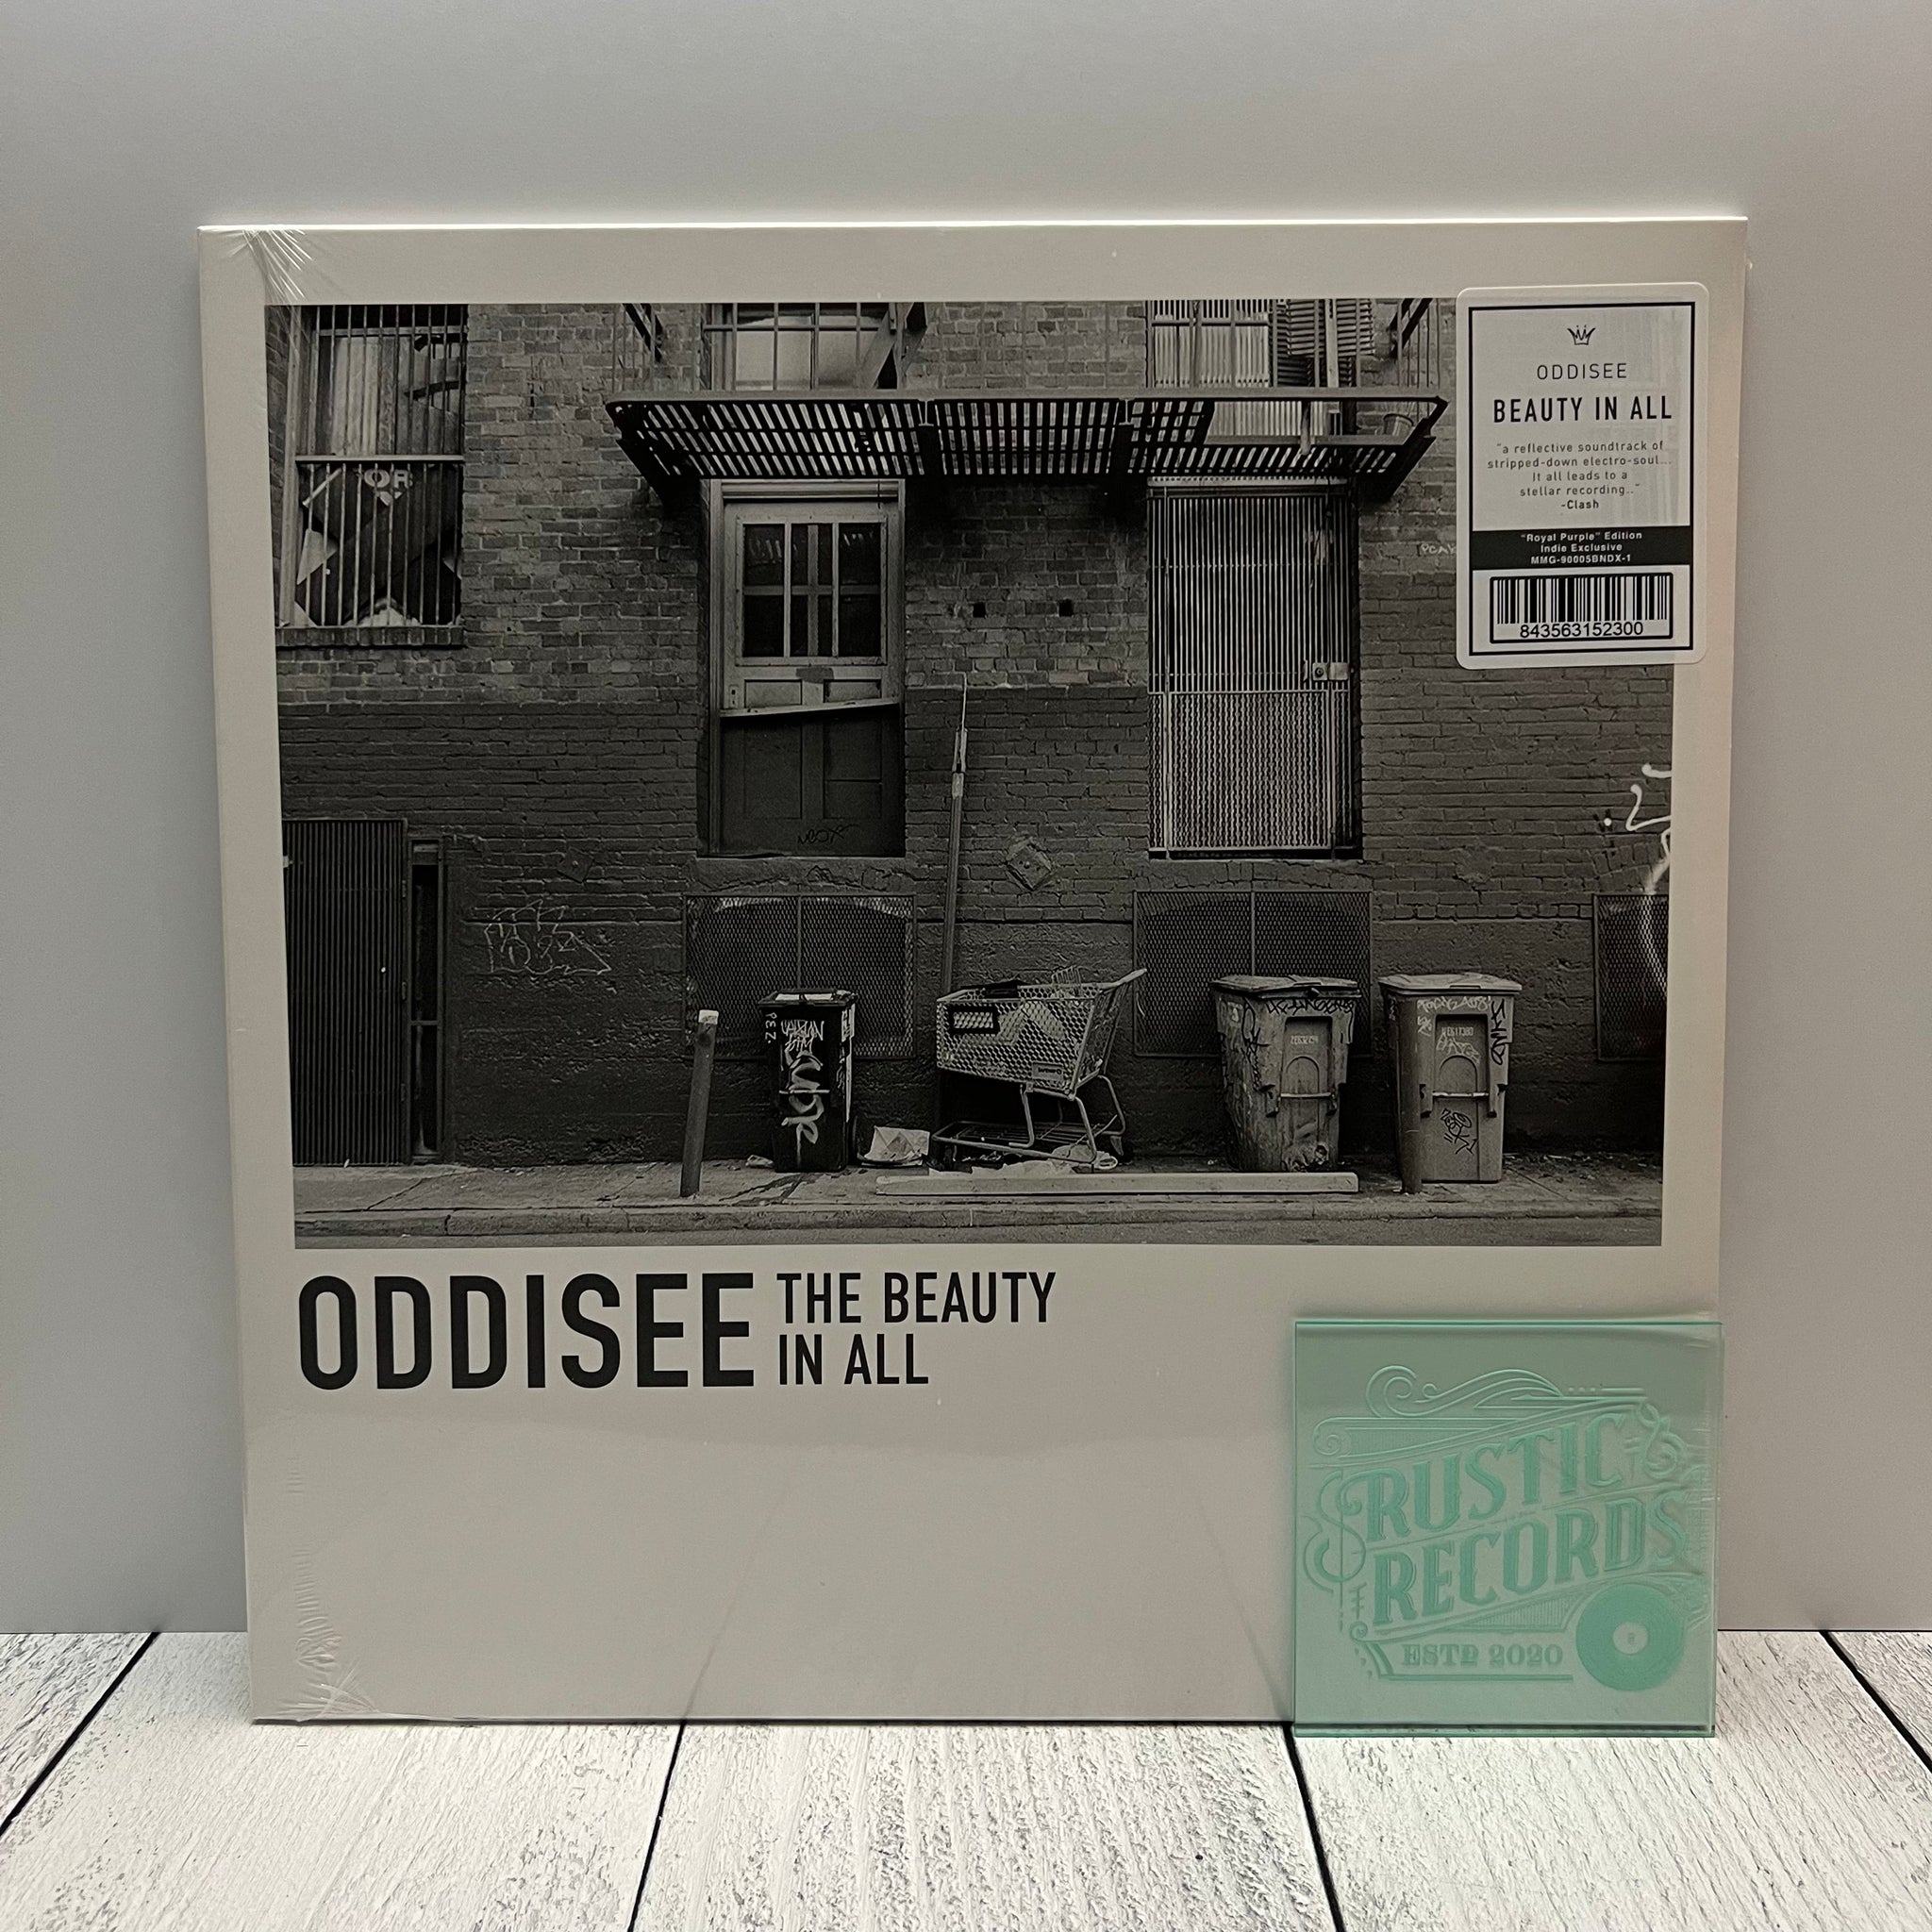 Oddisee - The Beauty In All (Indie Exclusive Royal Purple Vinyl)